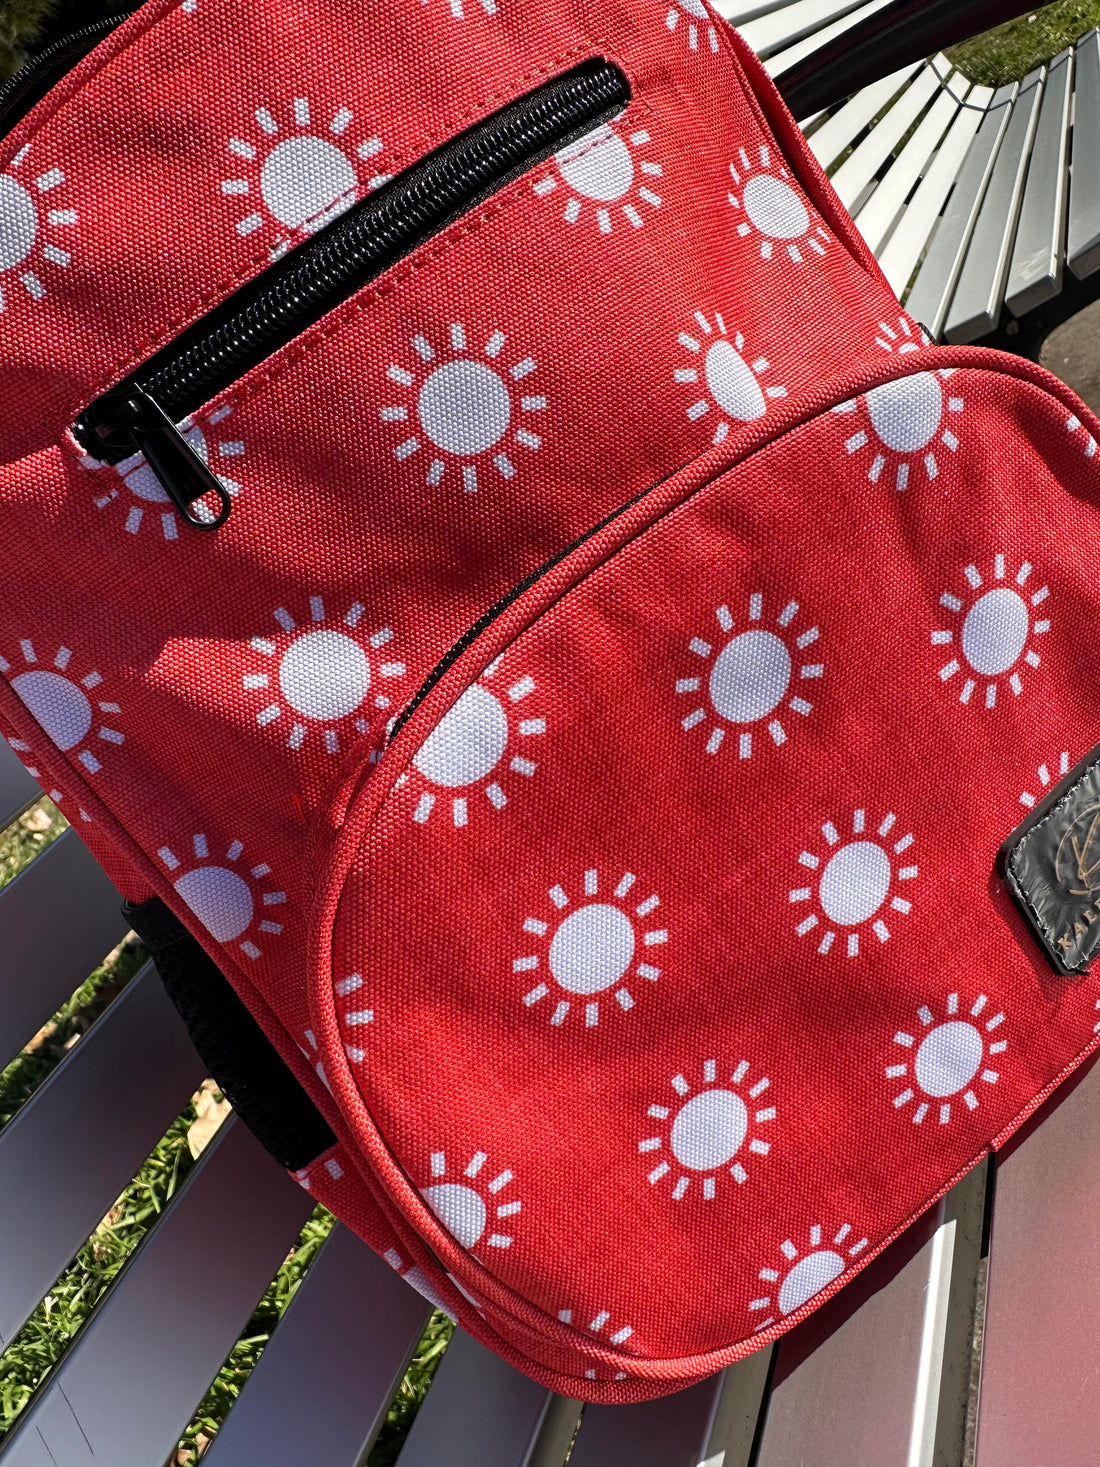 Toddler Backpack - Sunset